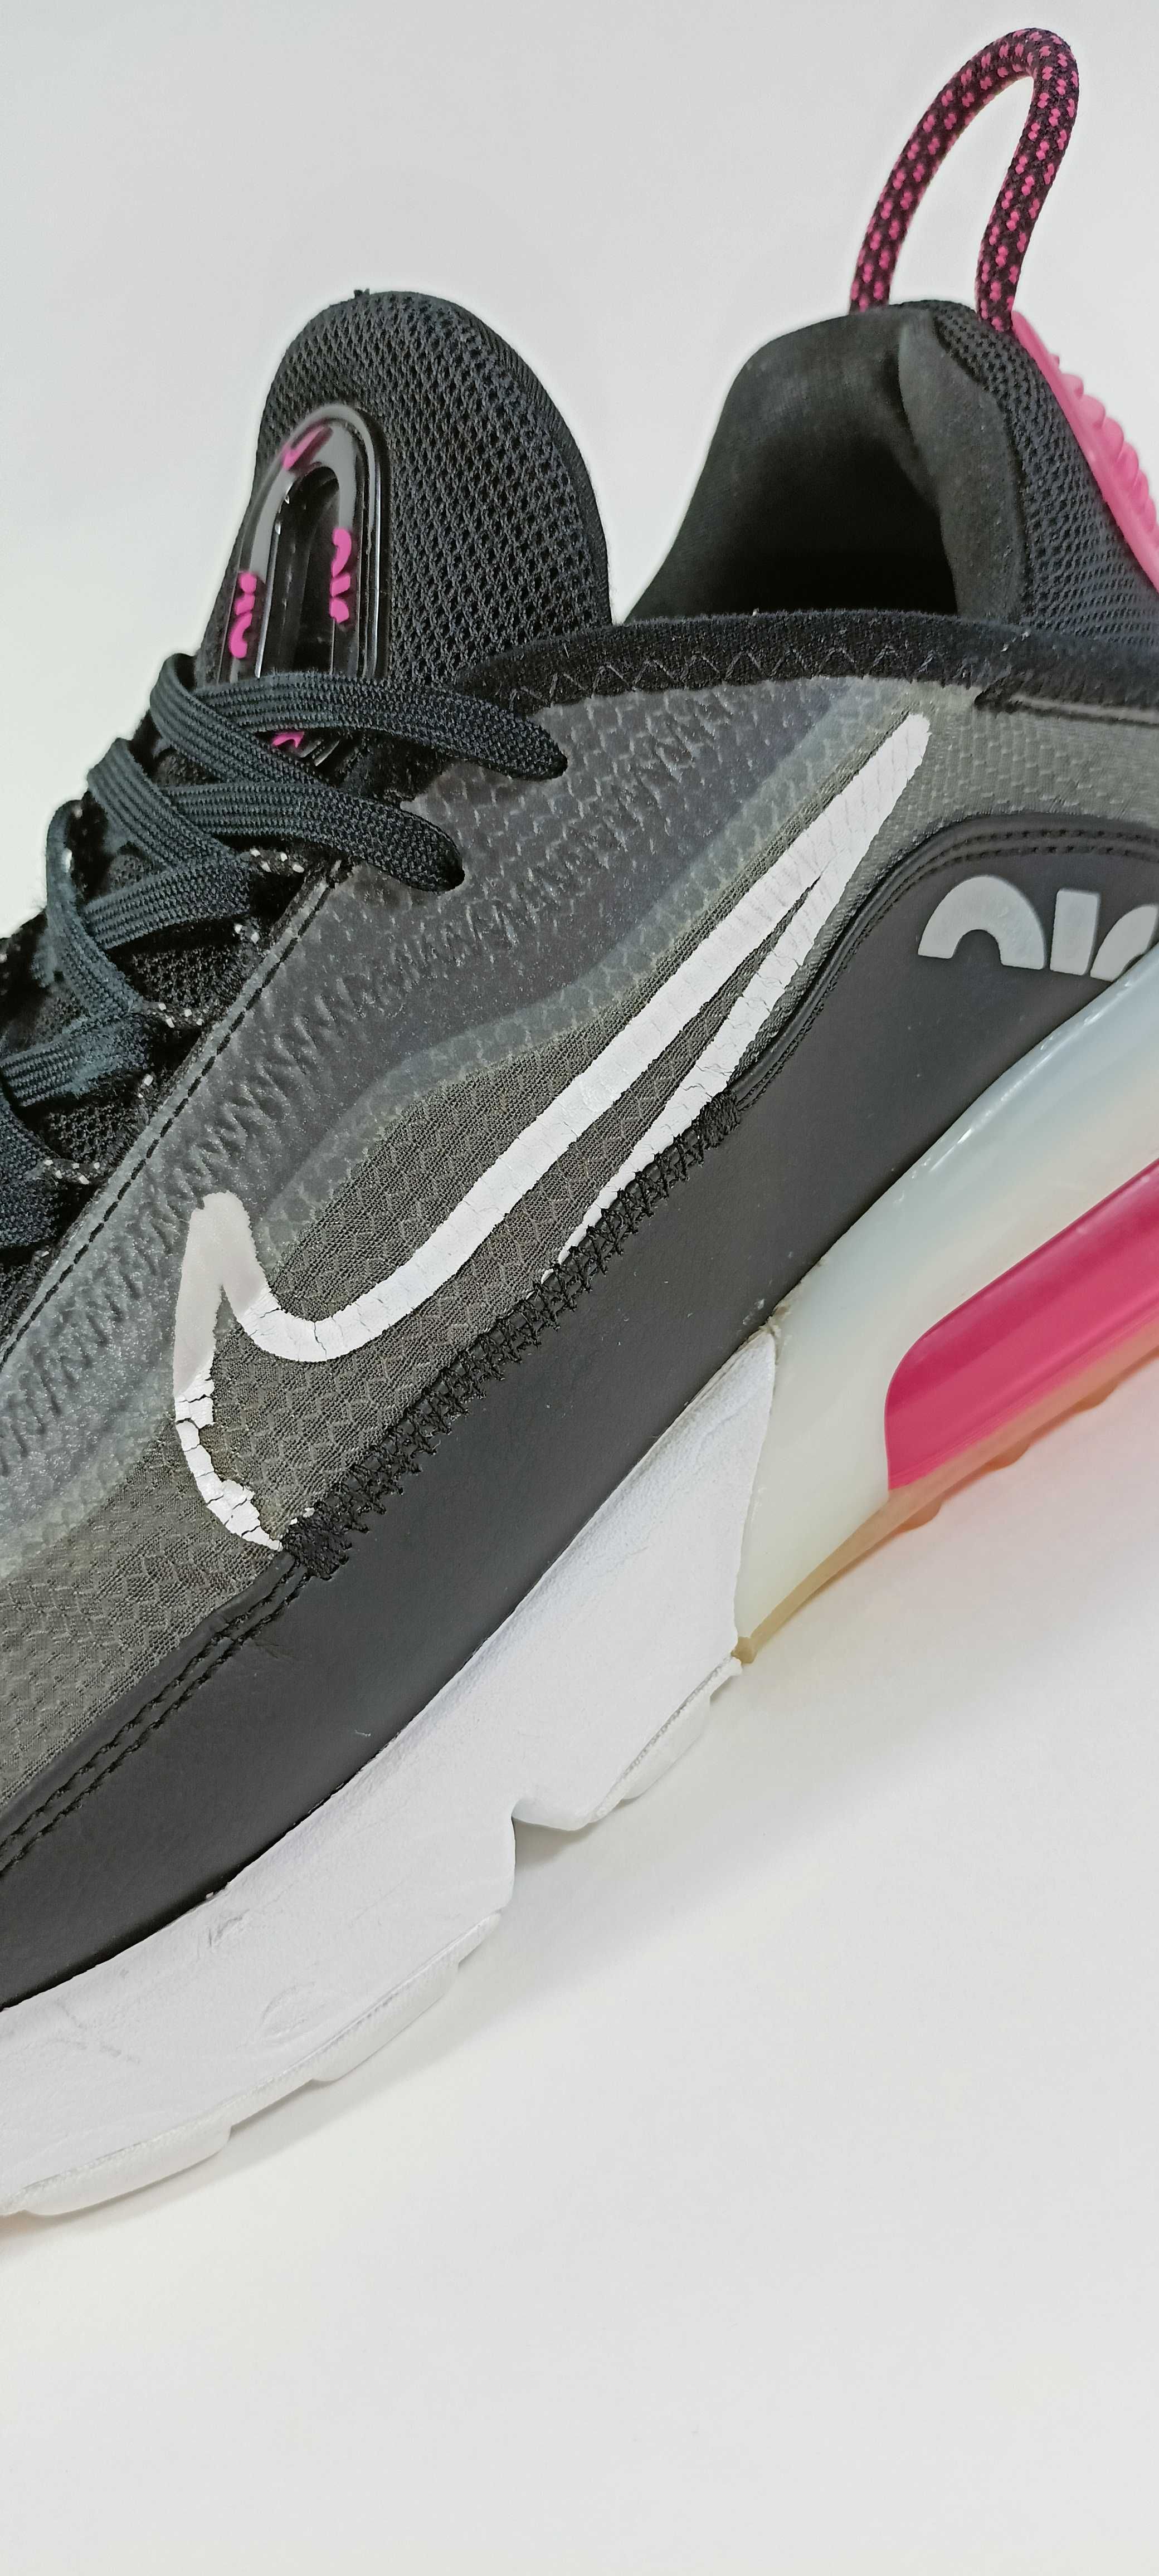 Buty damskie Nike Air Max 2090 rozmiar 40